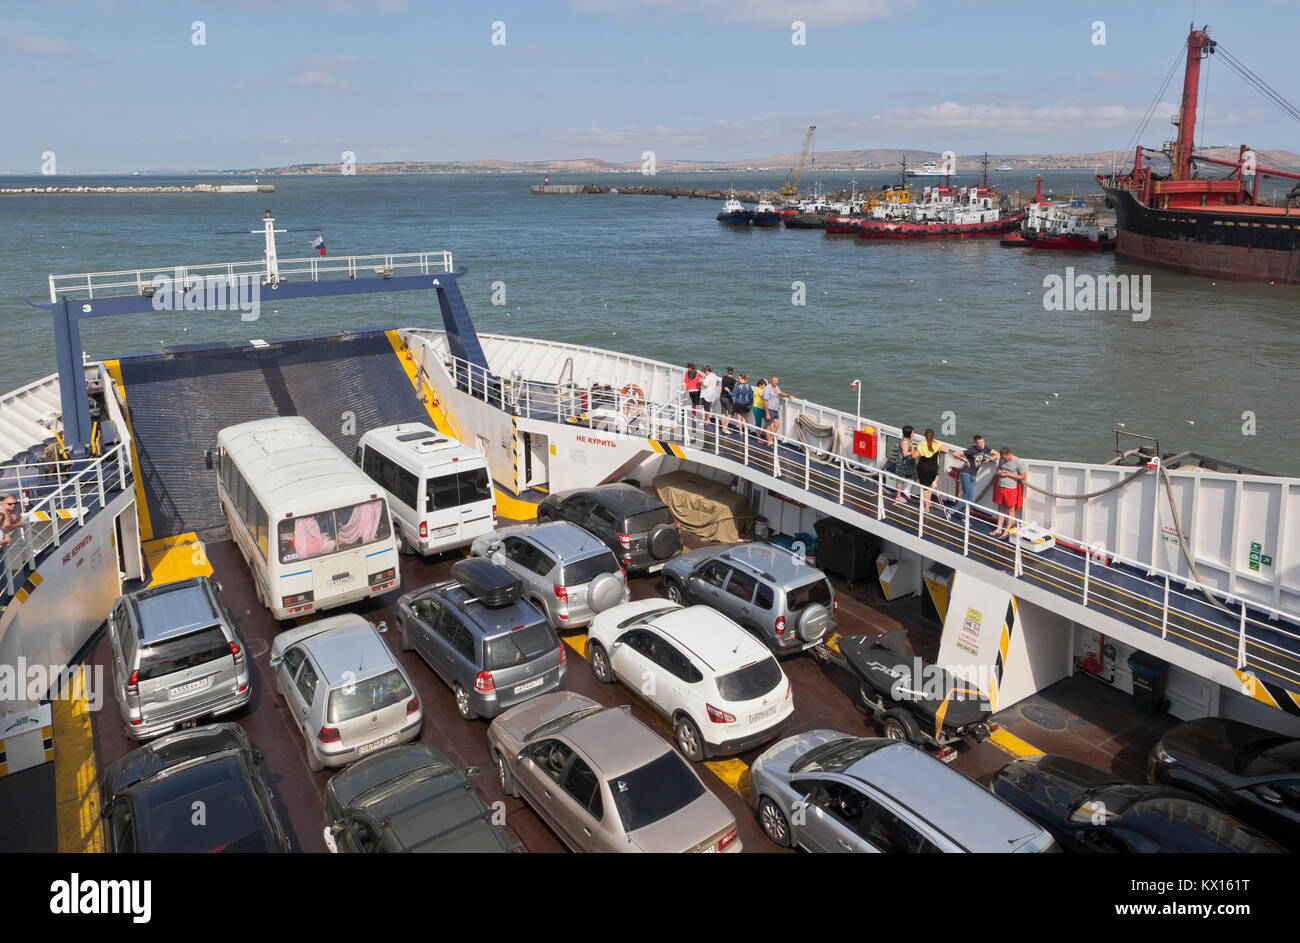 Kosa Chushka, Temryuk district, Krasnodar region, Russia - July 18, 2017: Car transportation through the Kerch Strait on the ferry 'Elena' Stock Photo